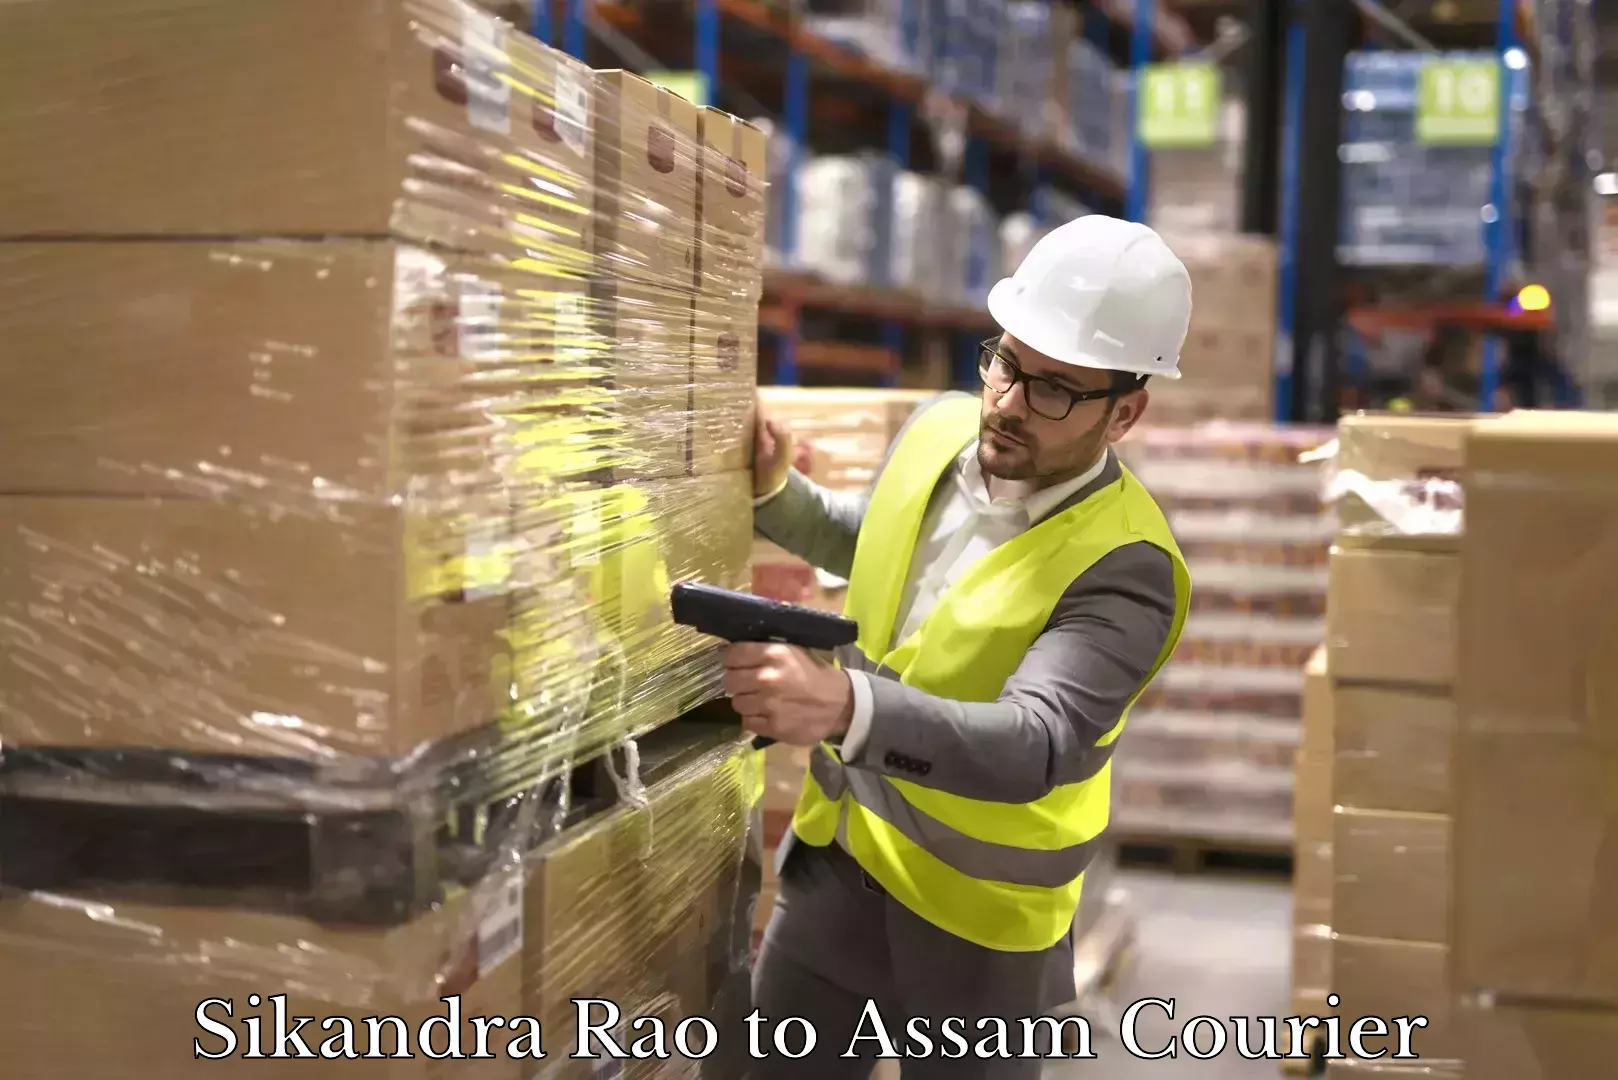 Cargo delivery service Sikandra Rao to Assam